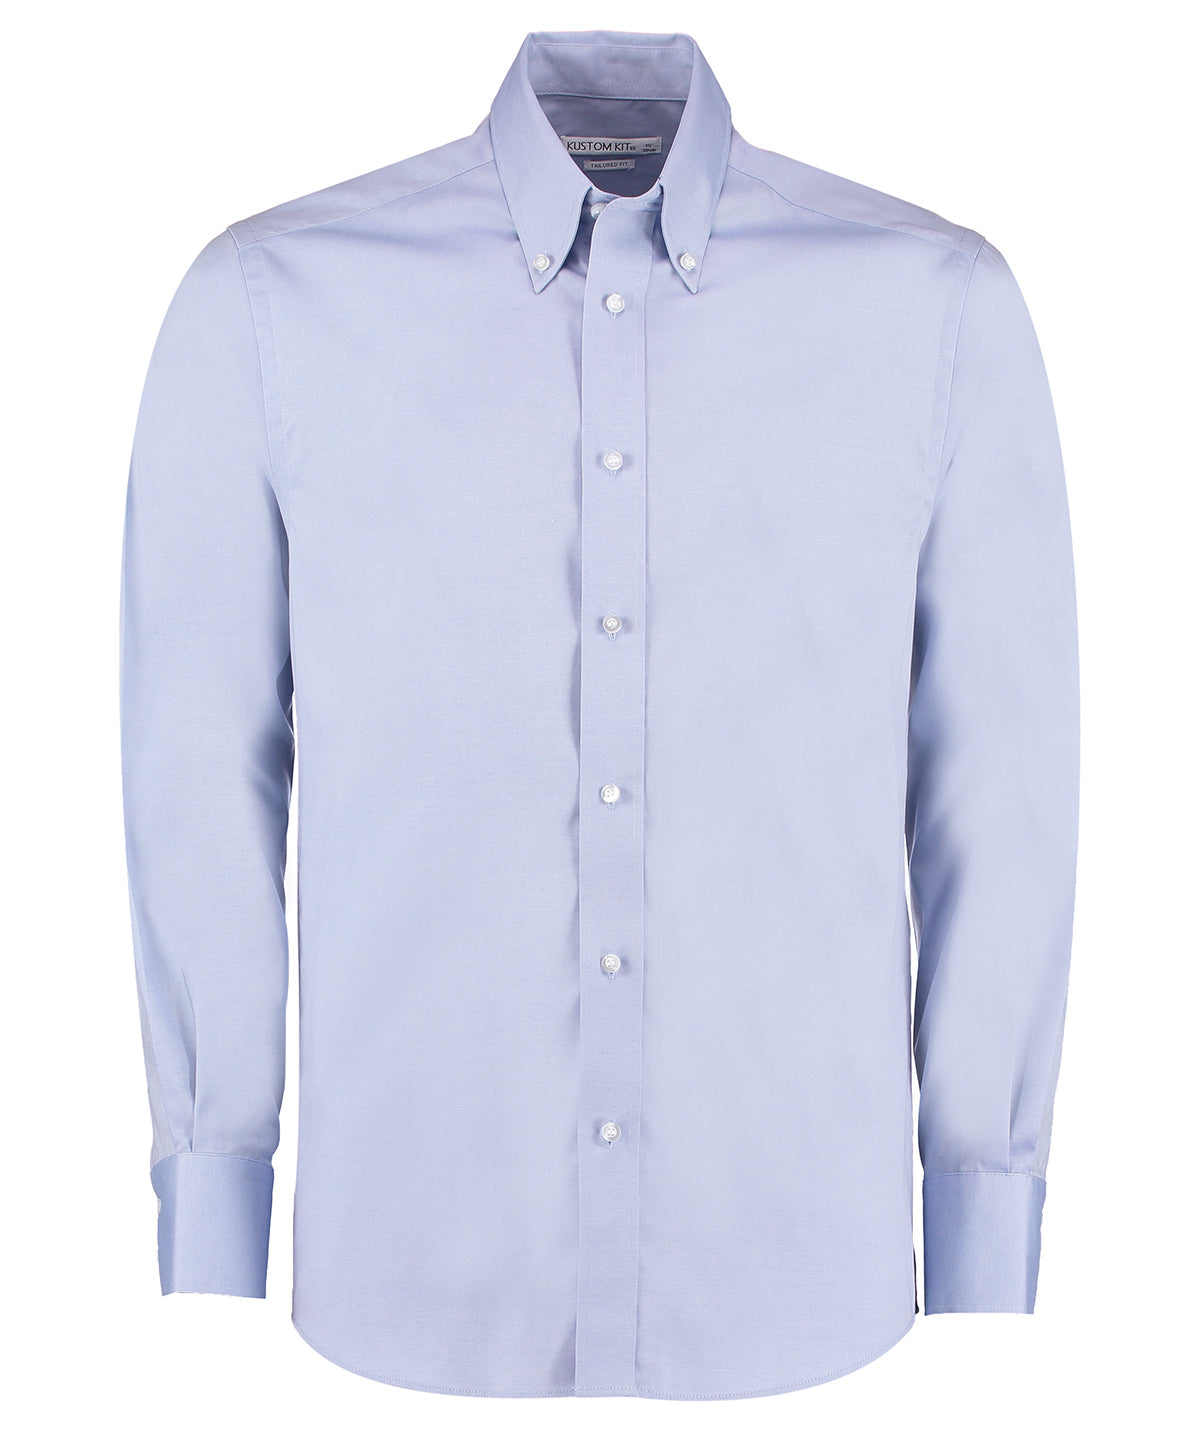 Personalised Shirts - Black Kustom Kit Premium Oxford shirt long-sleeved (tailored fit)